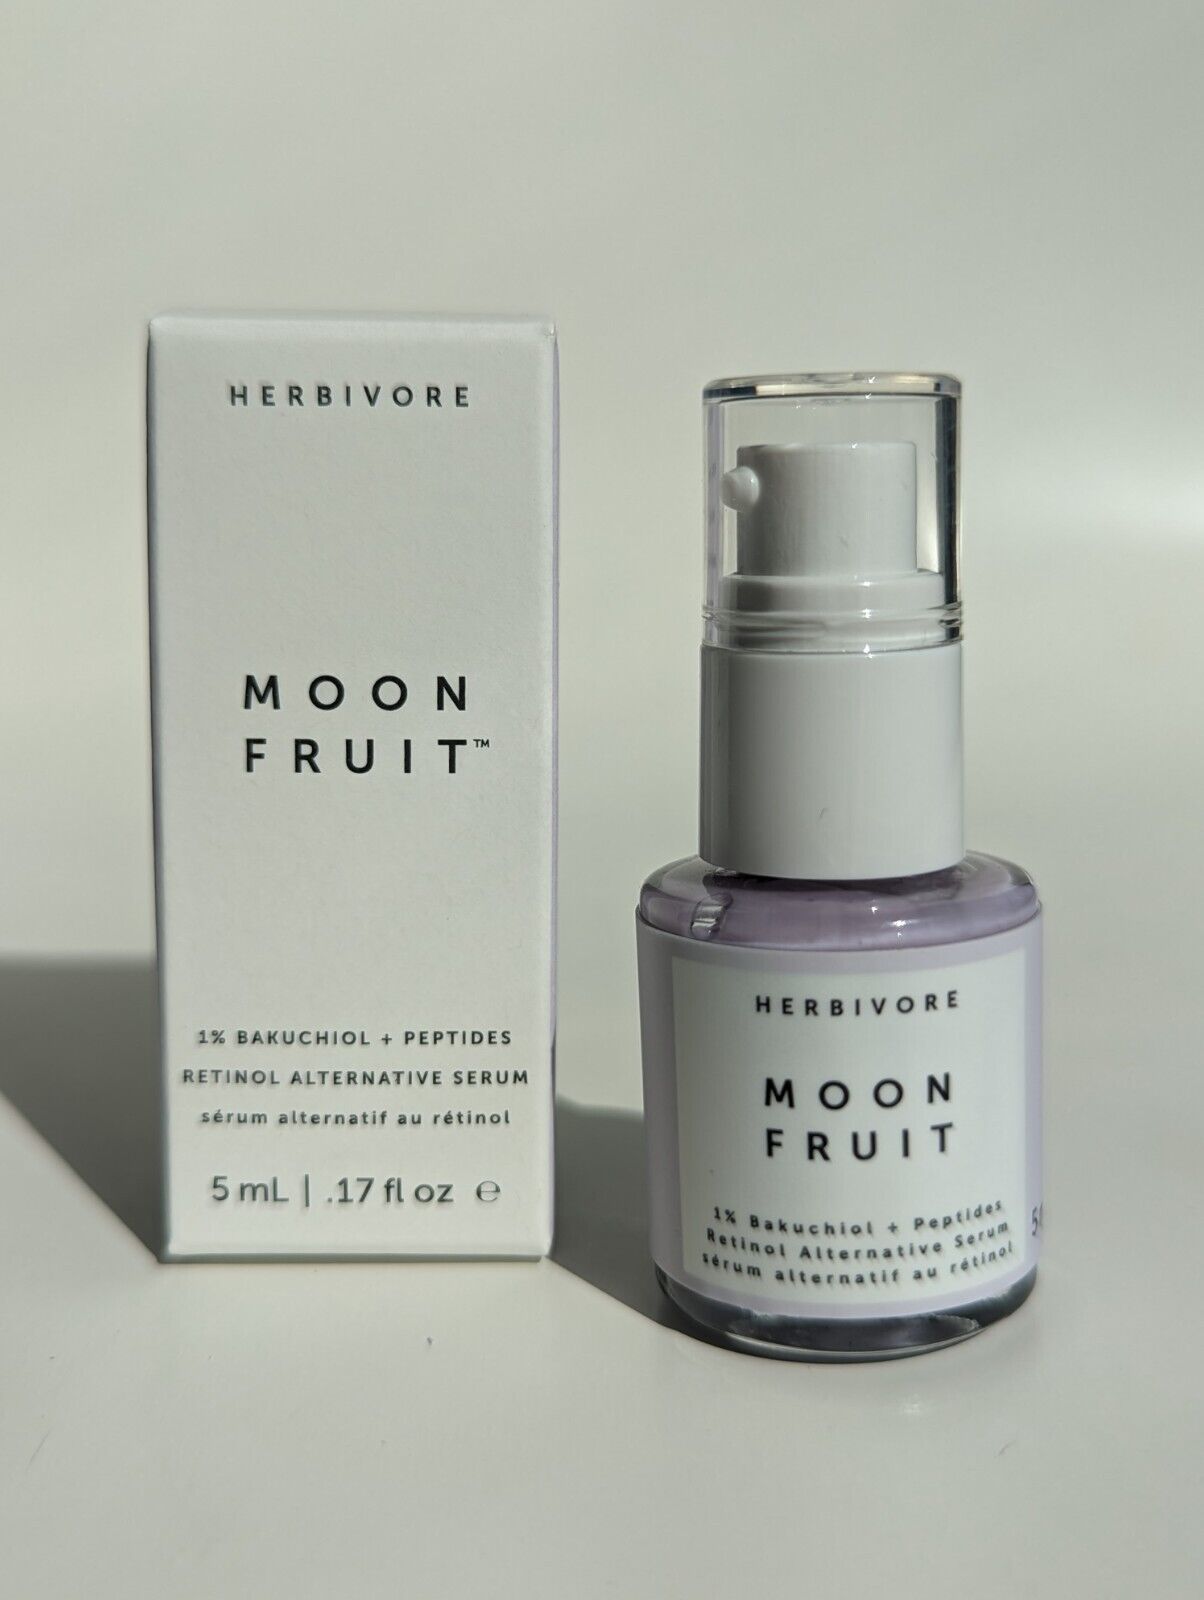 Moon Fruit 1% Bakuchiol + Peptides Retinol Alternative Serum Trial Size 5 ml